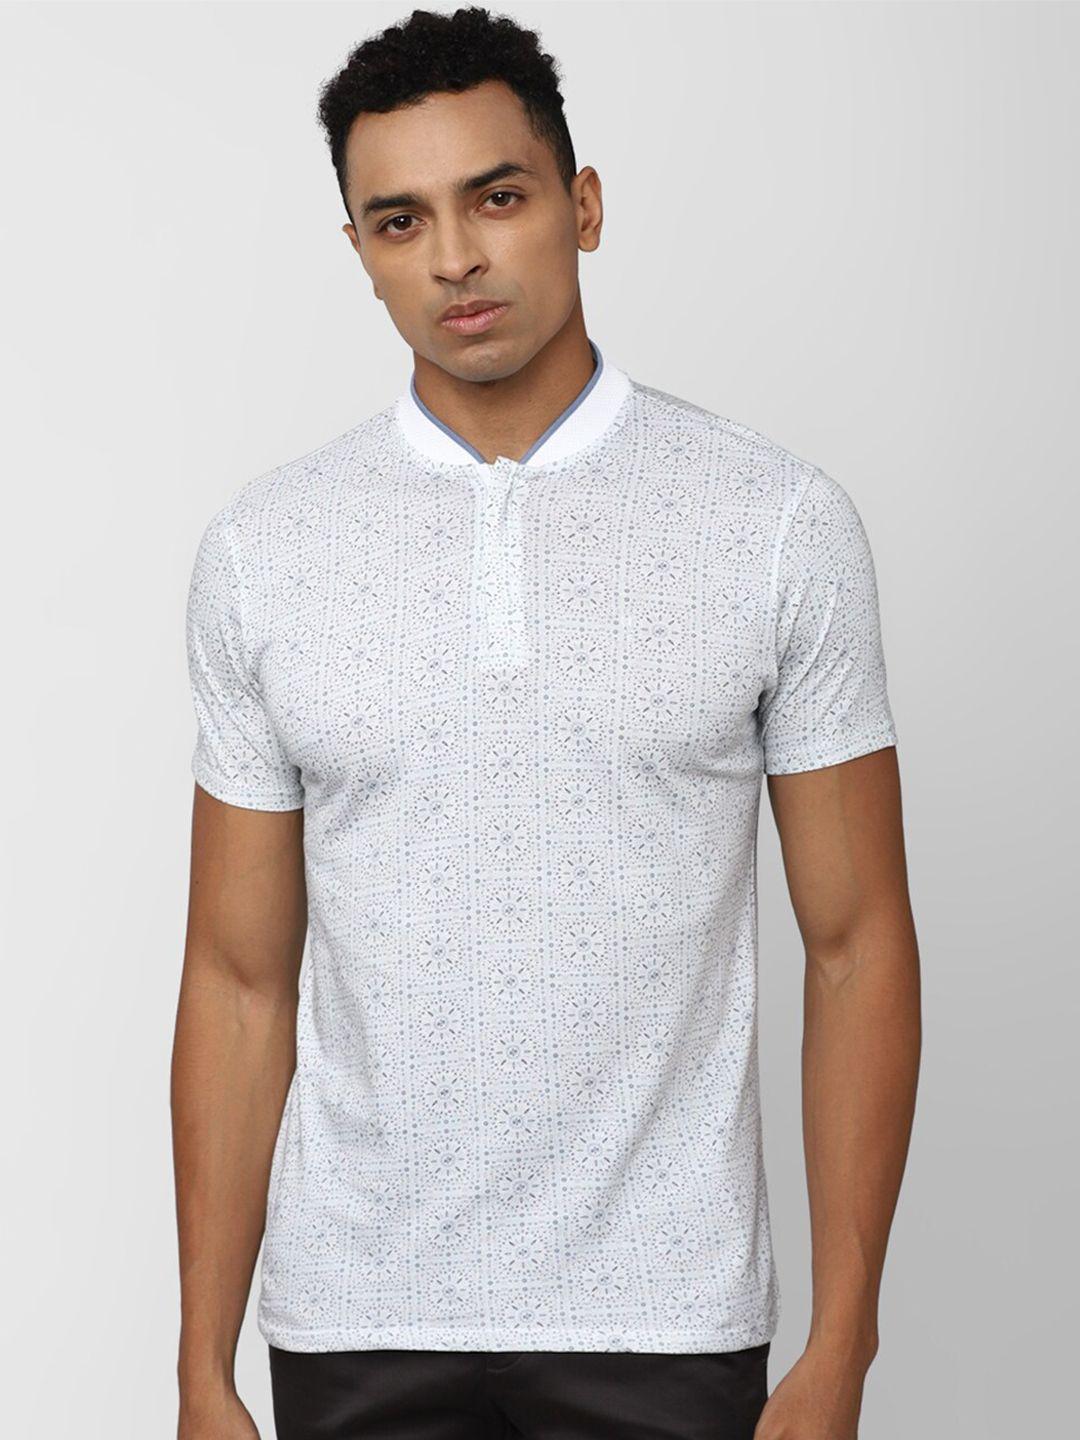 v dot geometric printed mandarin collar slim fit pure cotton t-shirt